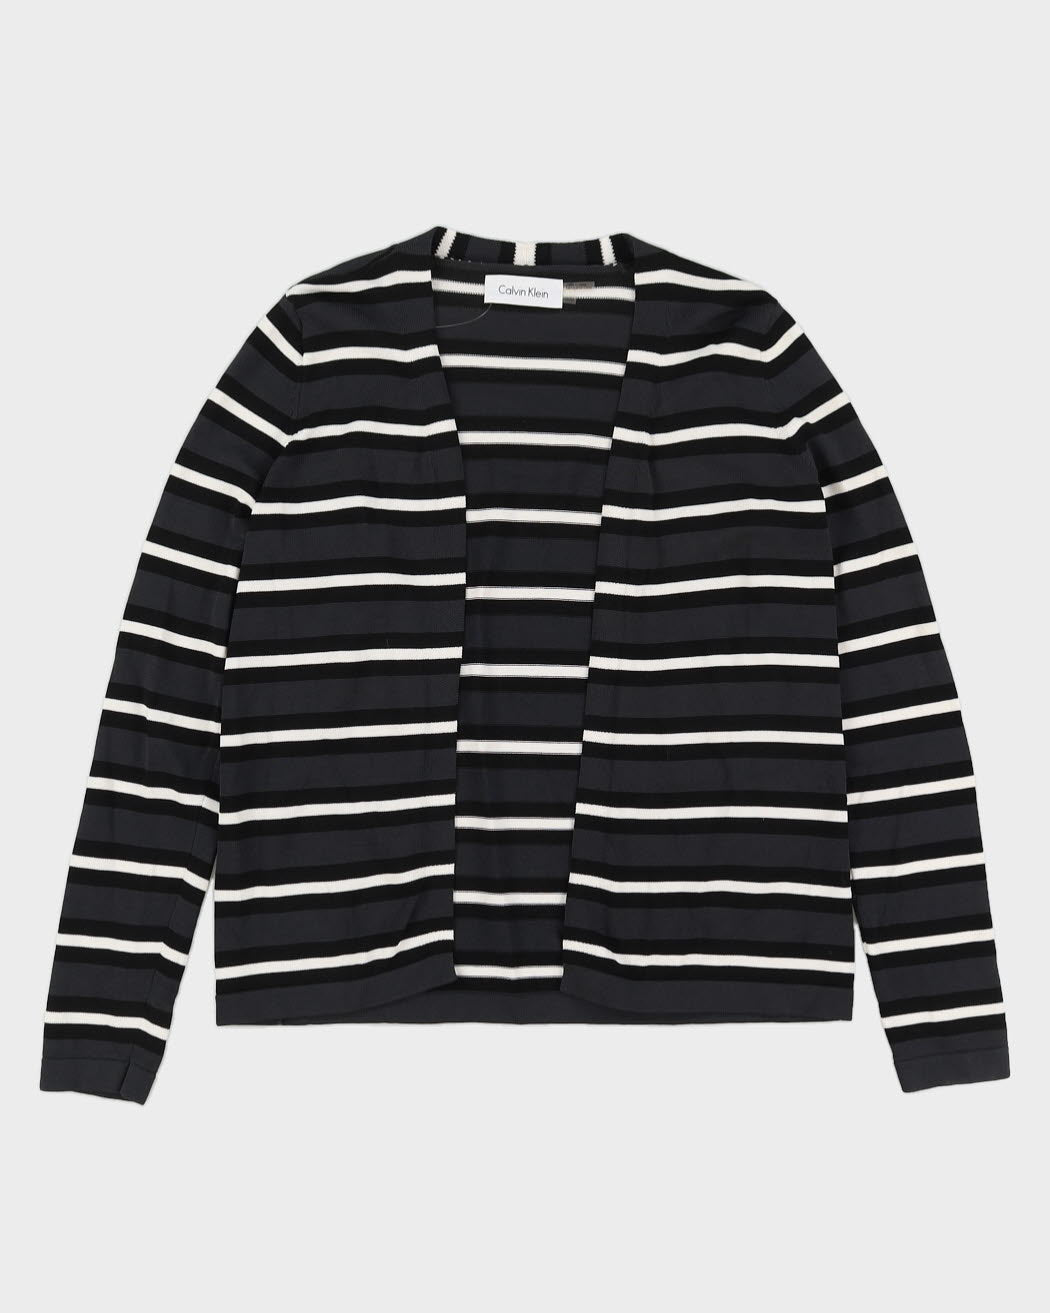 Calvin Klein Grey Striped Cardigan - S